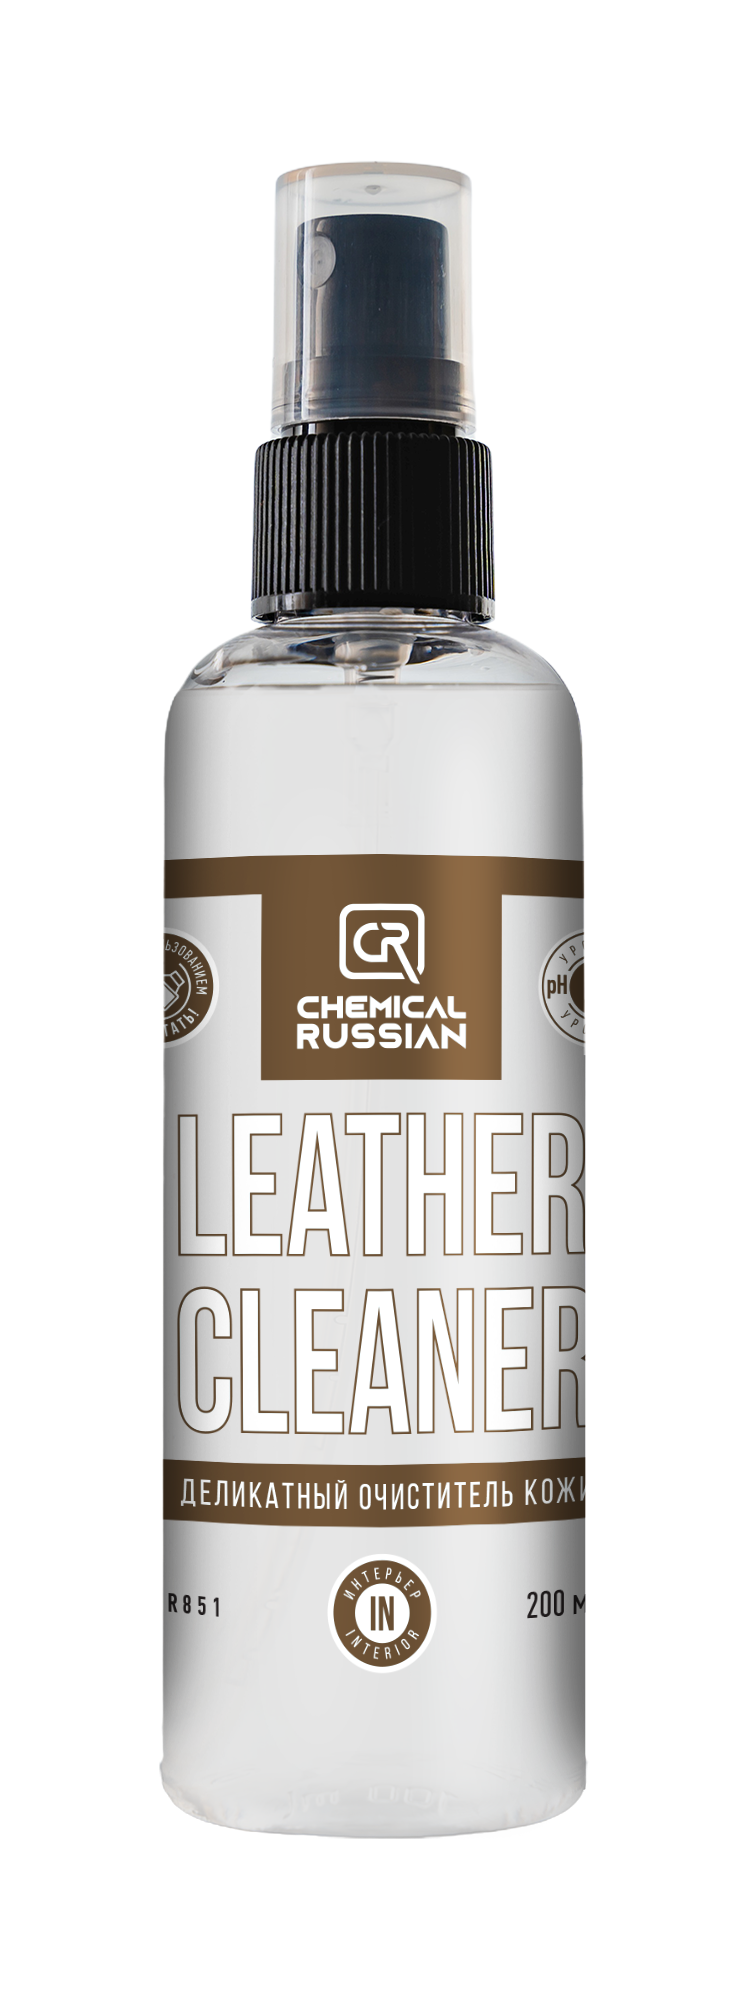 Очиститель кожи - Leather Cleaner 4 л Chemical Russian